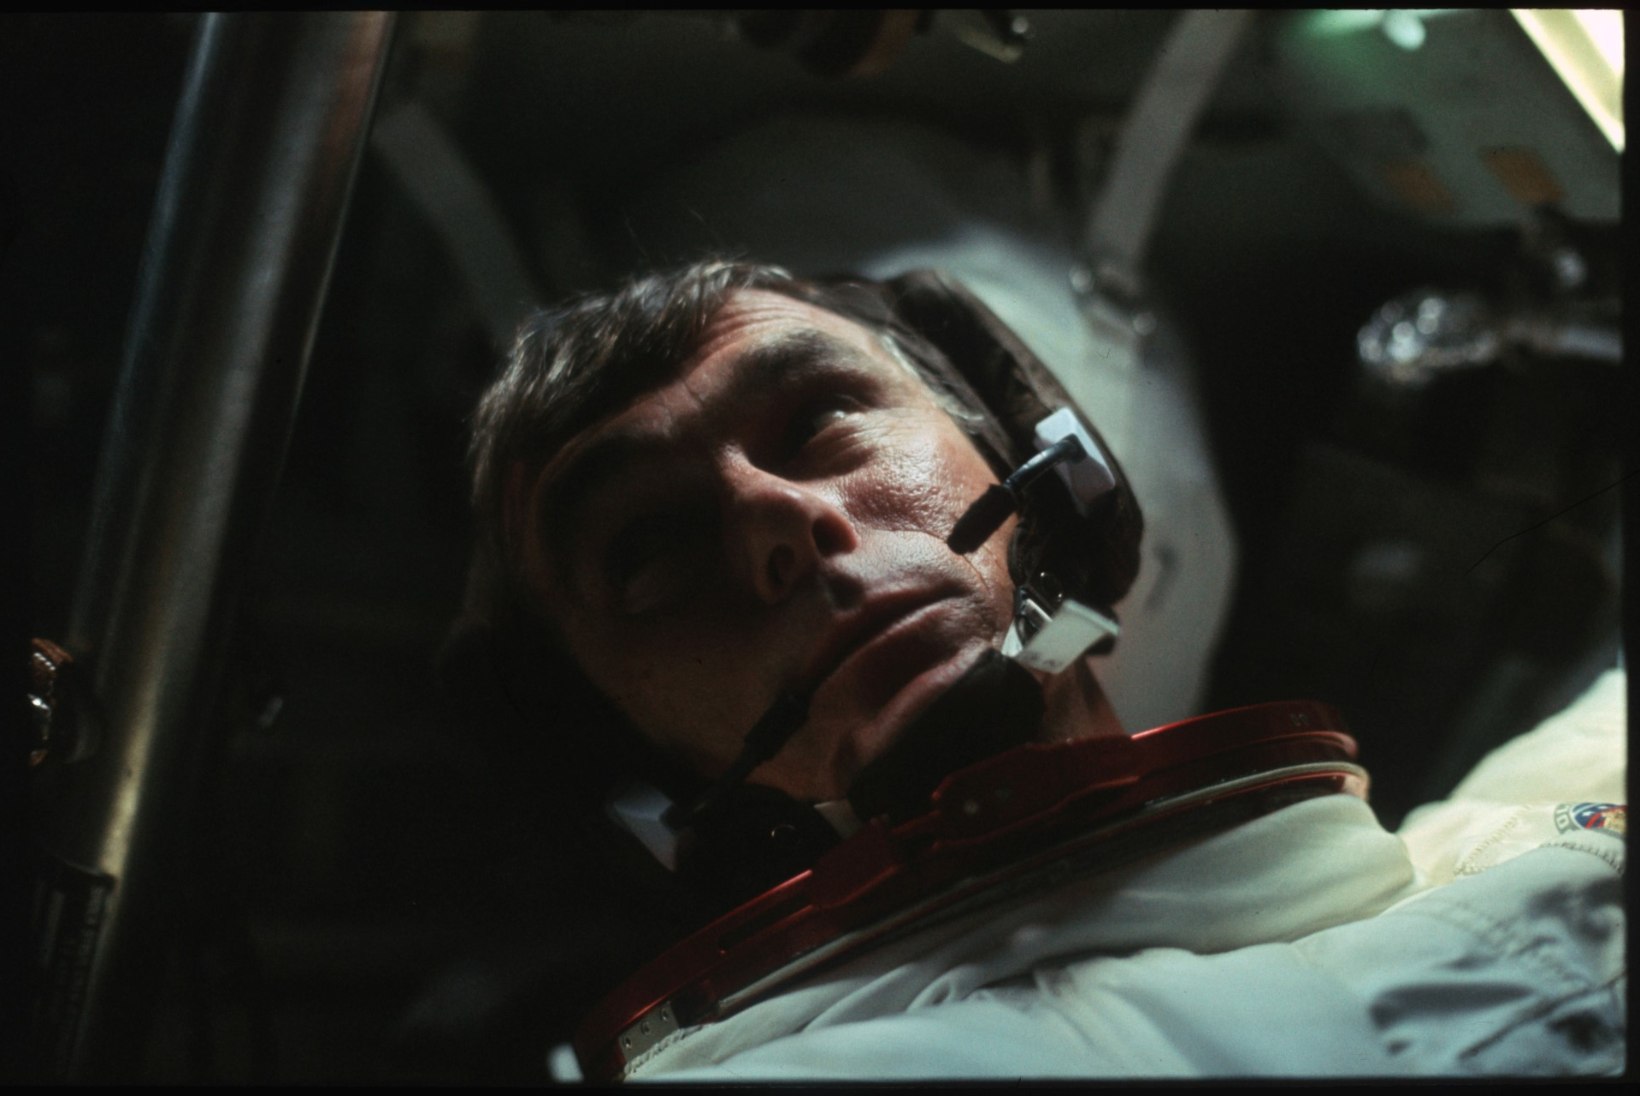 Suri viimasena Kuul käinud astronaut Eugene A. Cernan